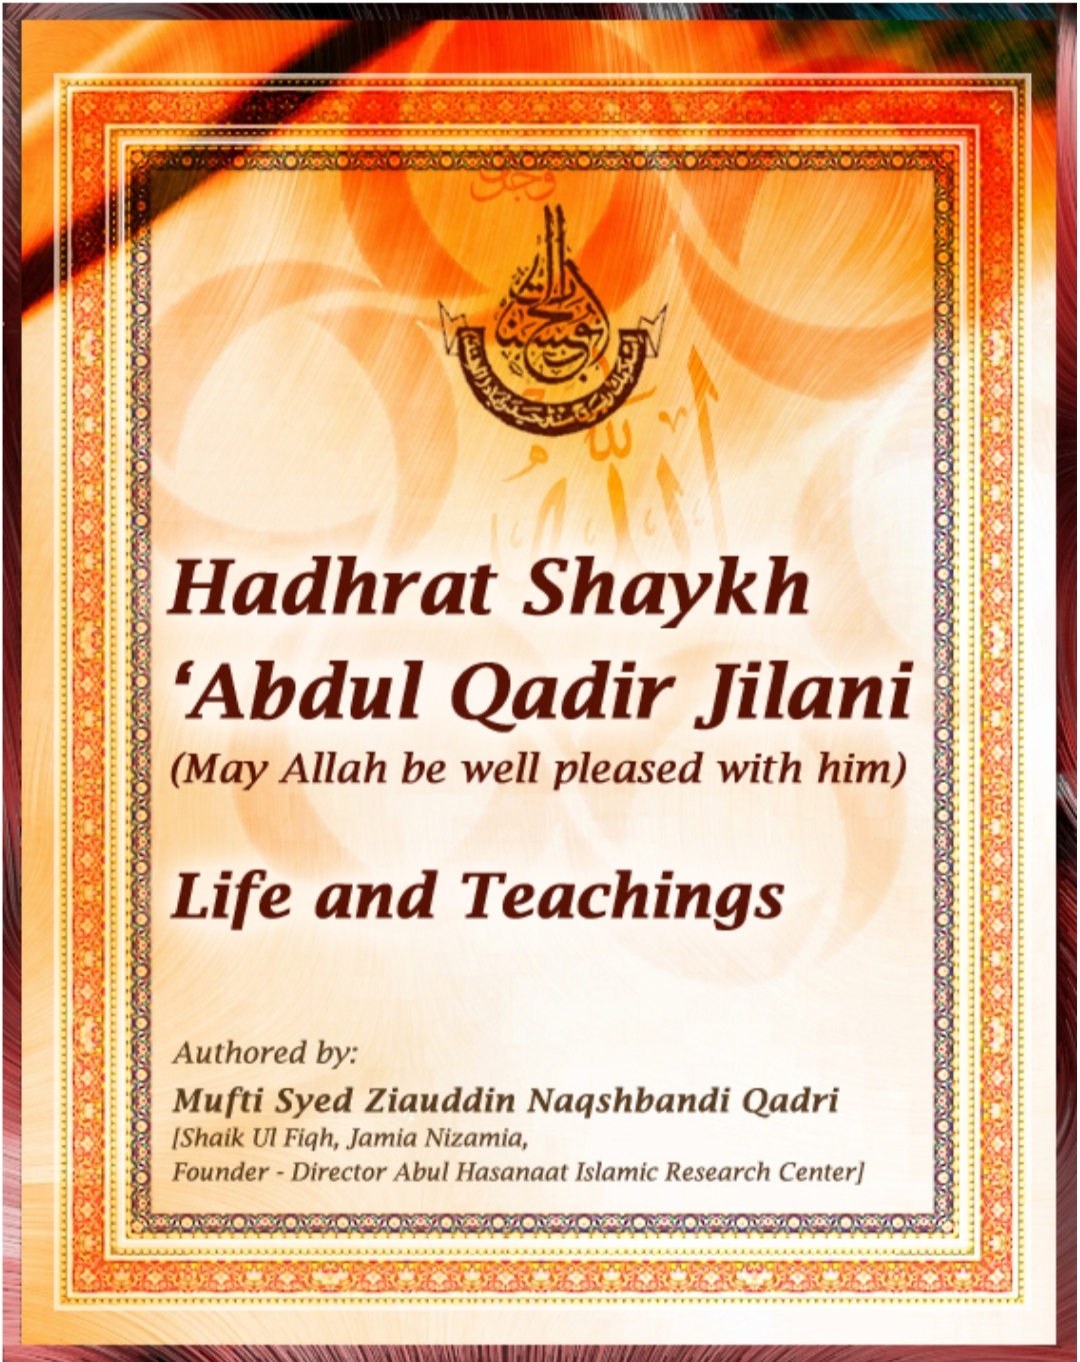 life and teachings of Hadhrat Shaykh ‘Abdul Qadir Jilani (May Allah be well pleased with him)